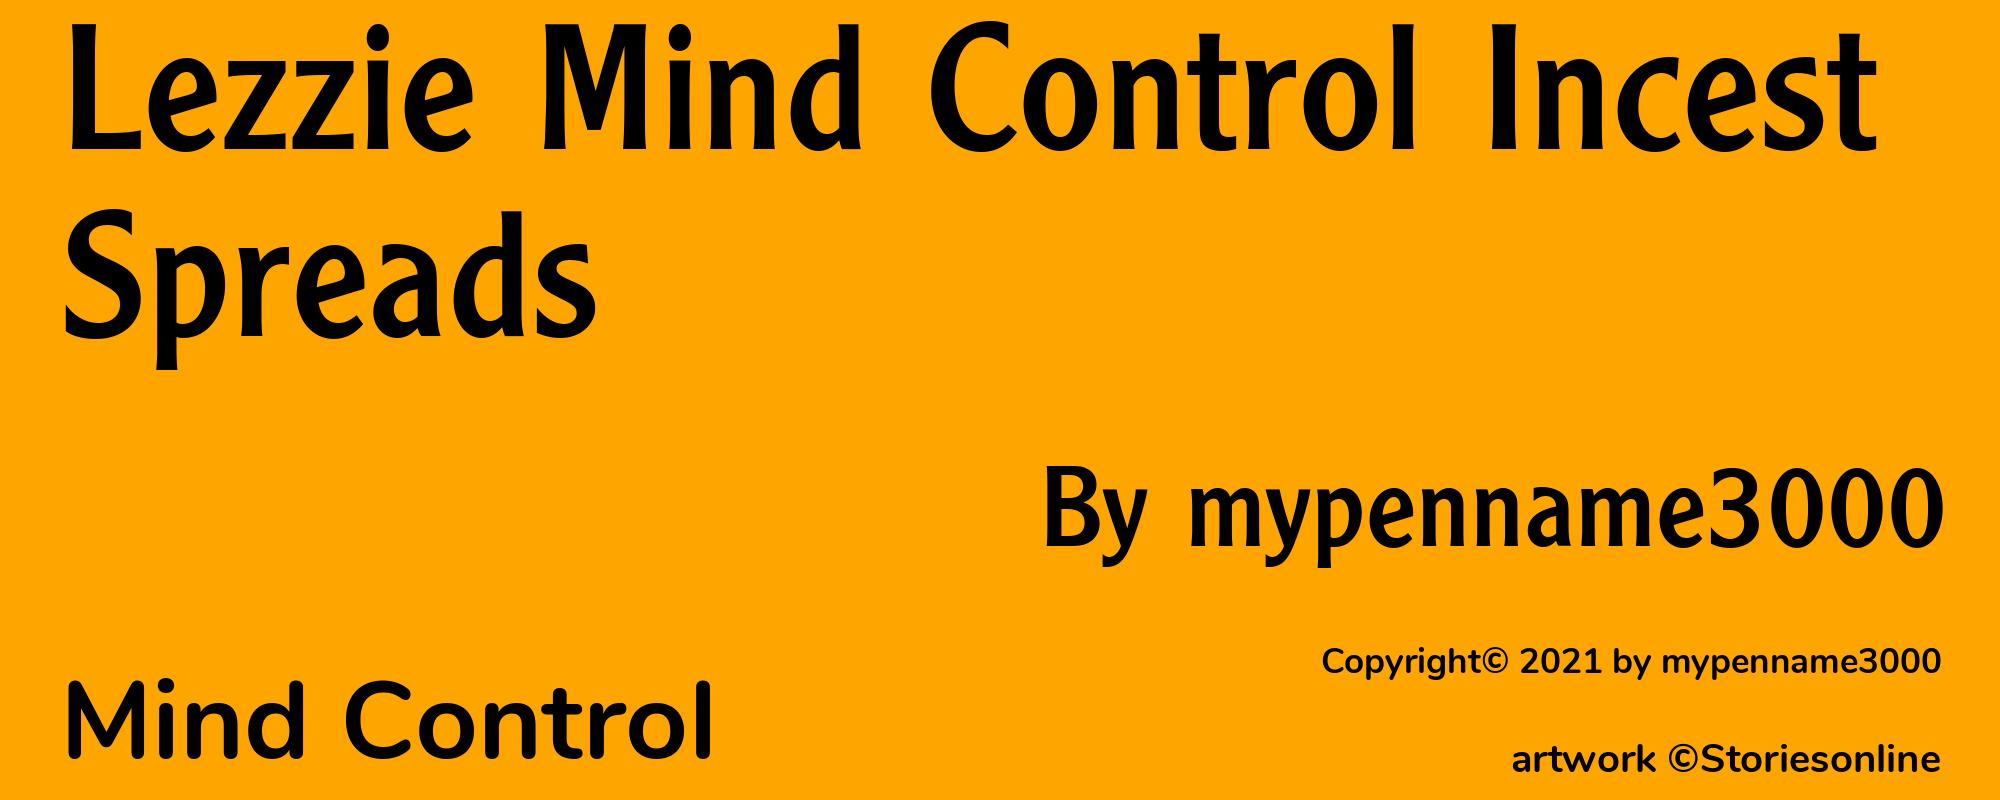 Lezzie Mind Control Incest Spreads - Cover